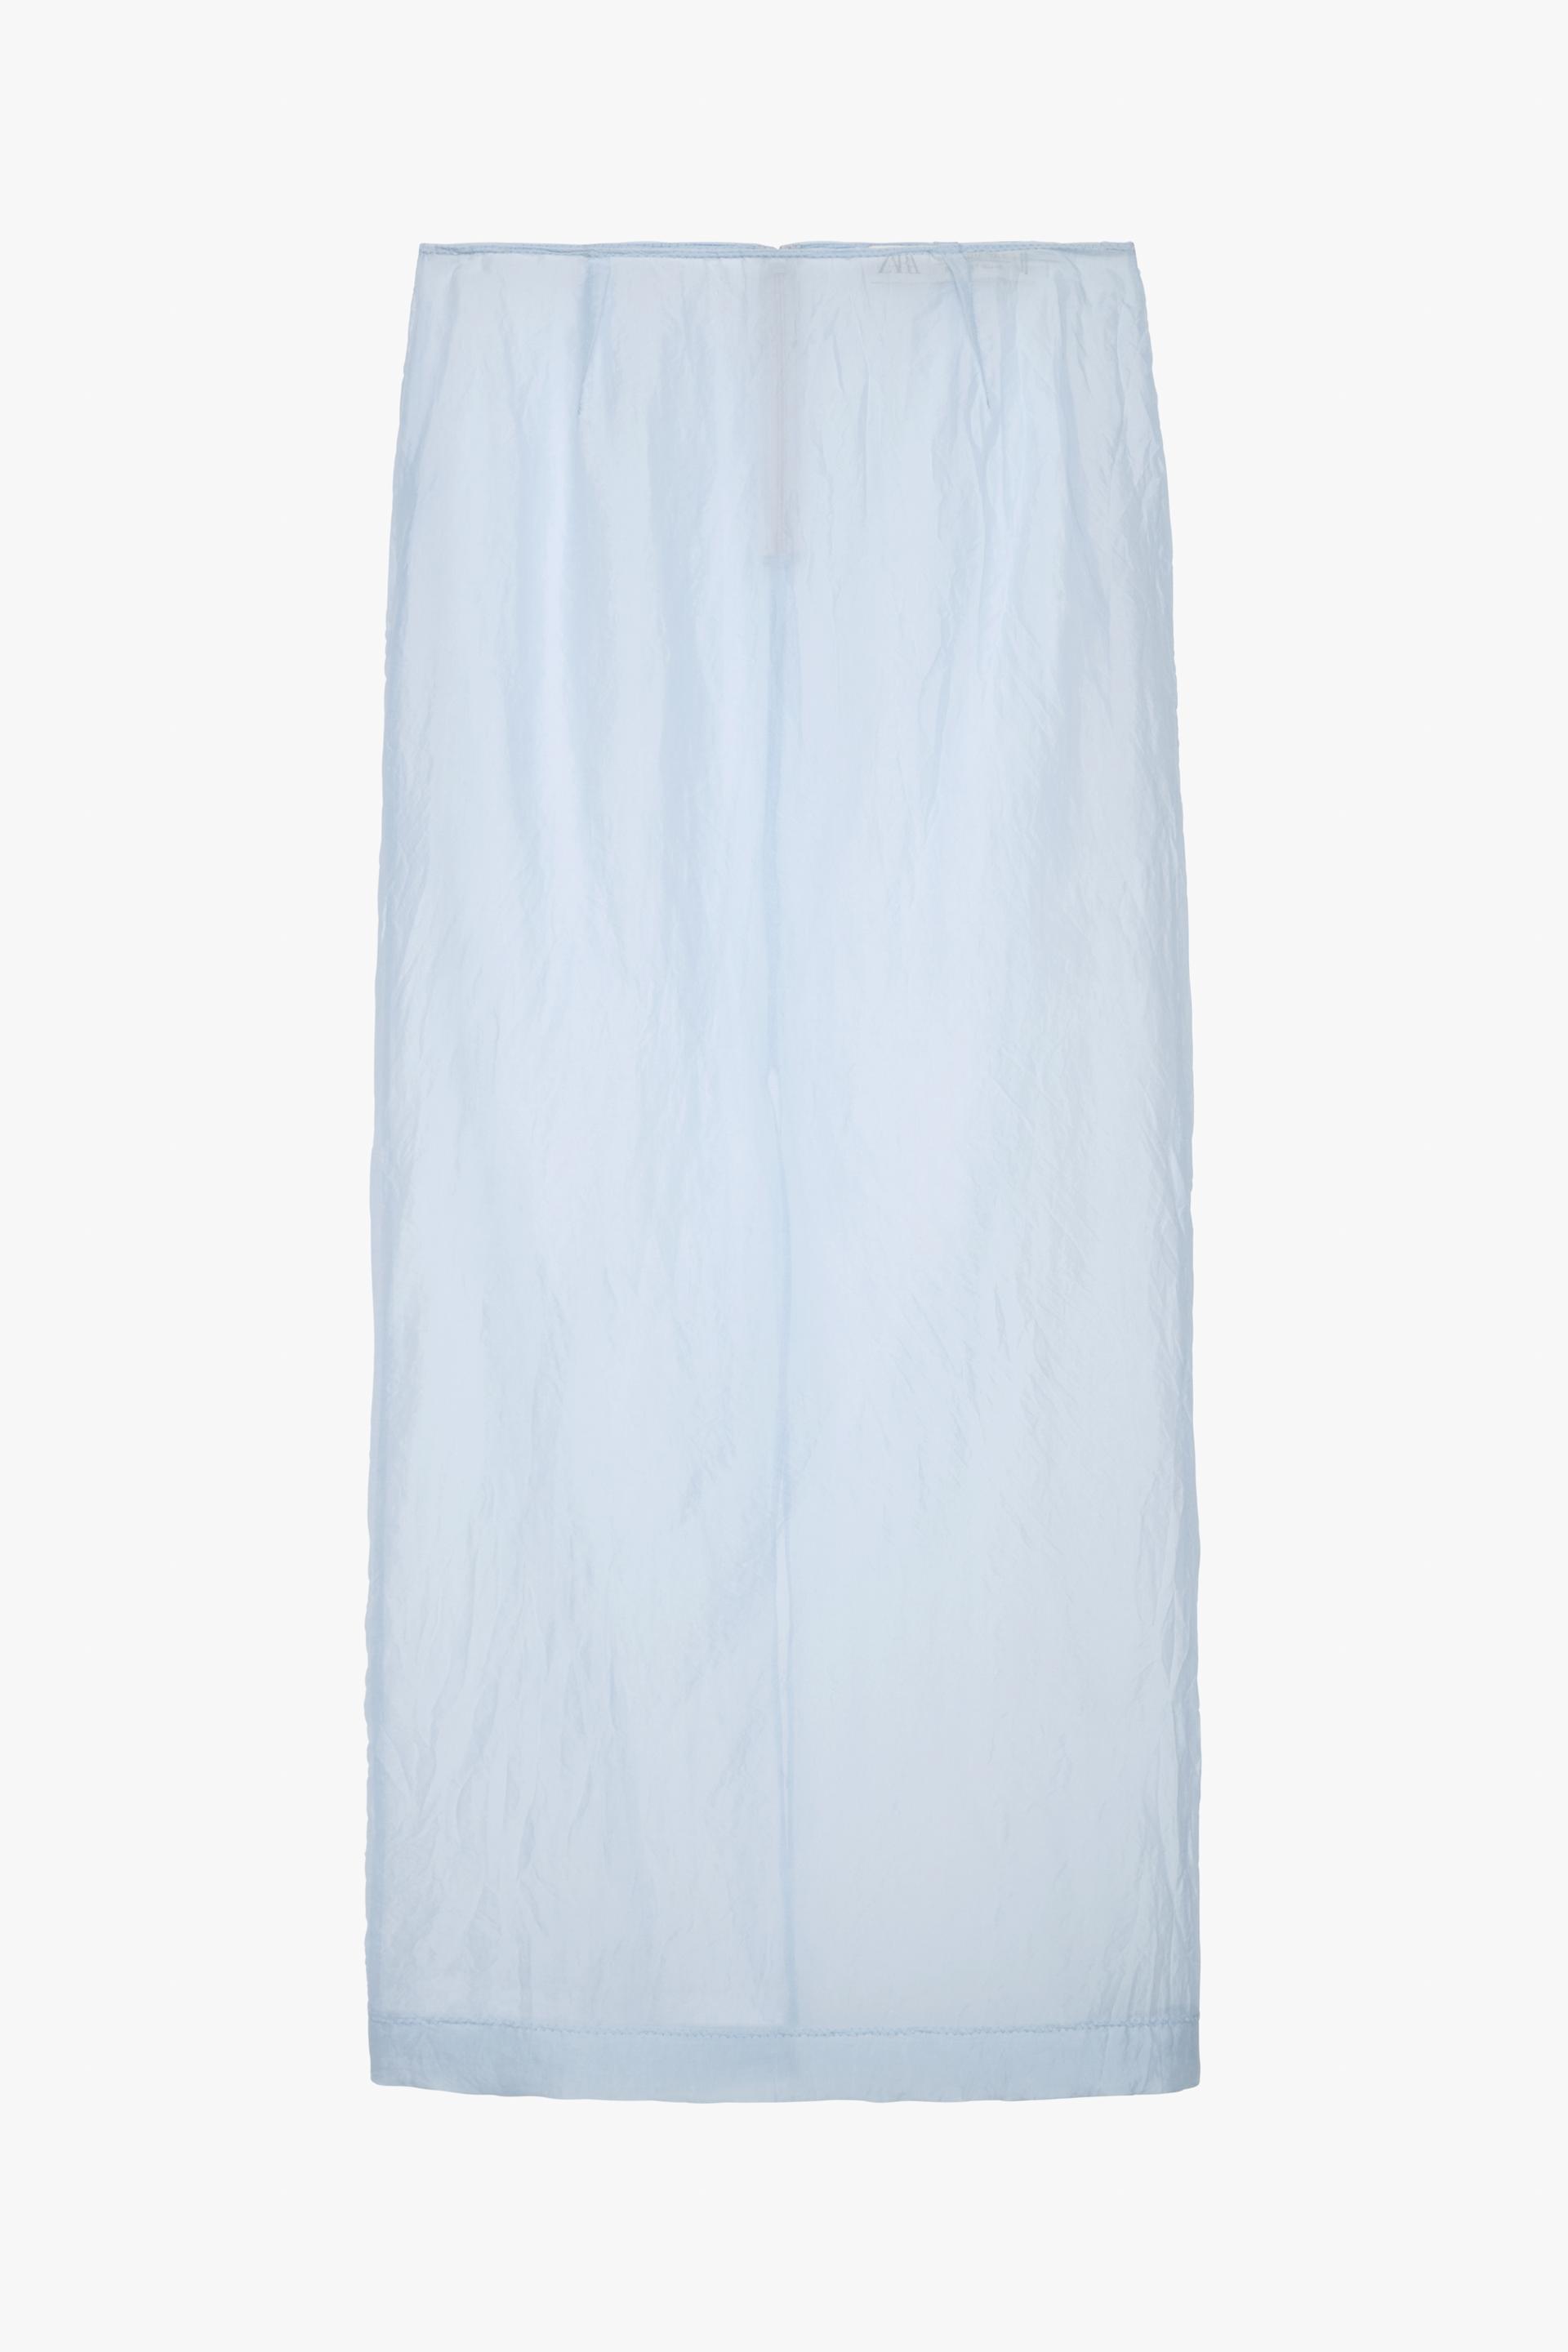 Silk Organza Skirt Limited Edition